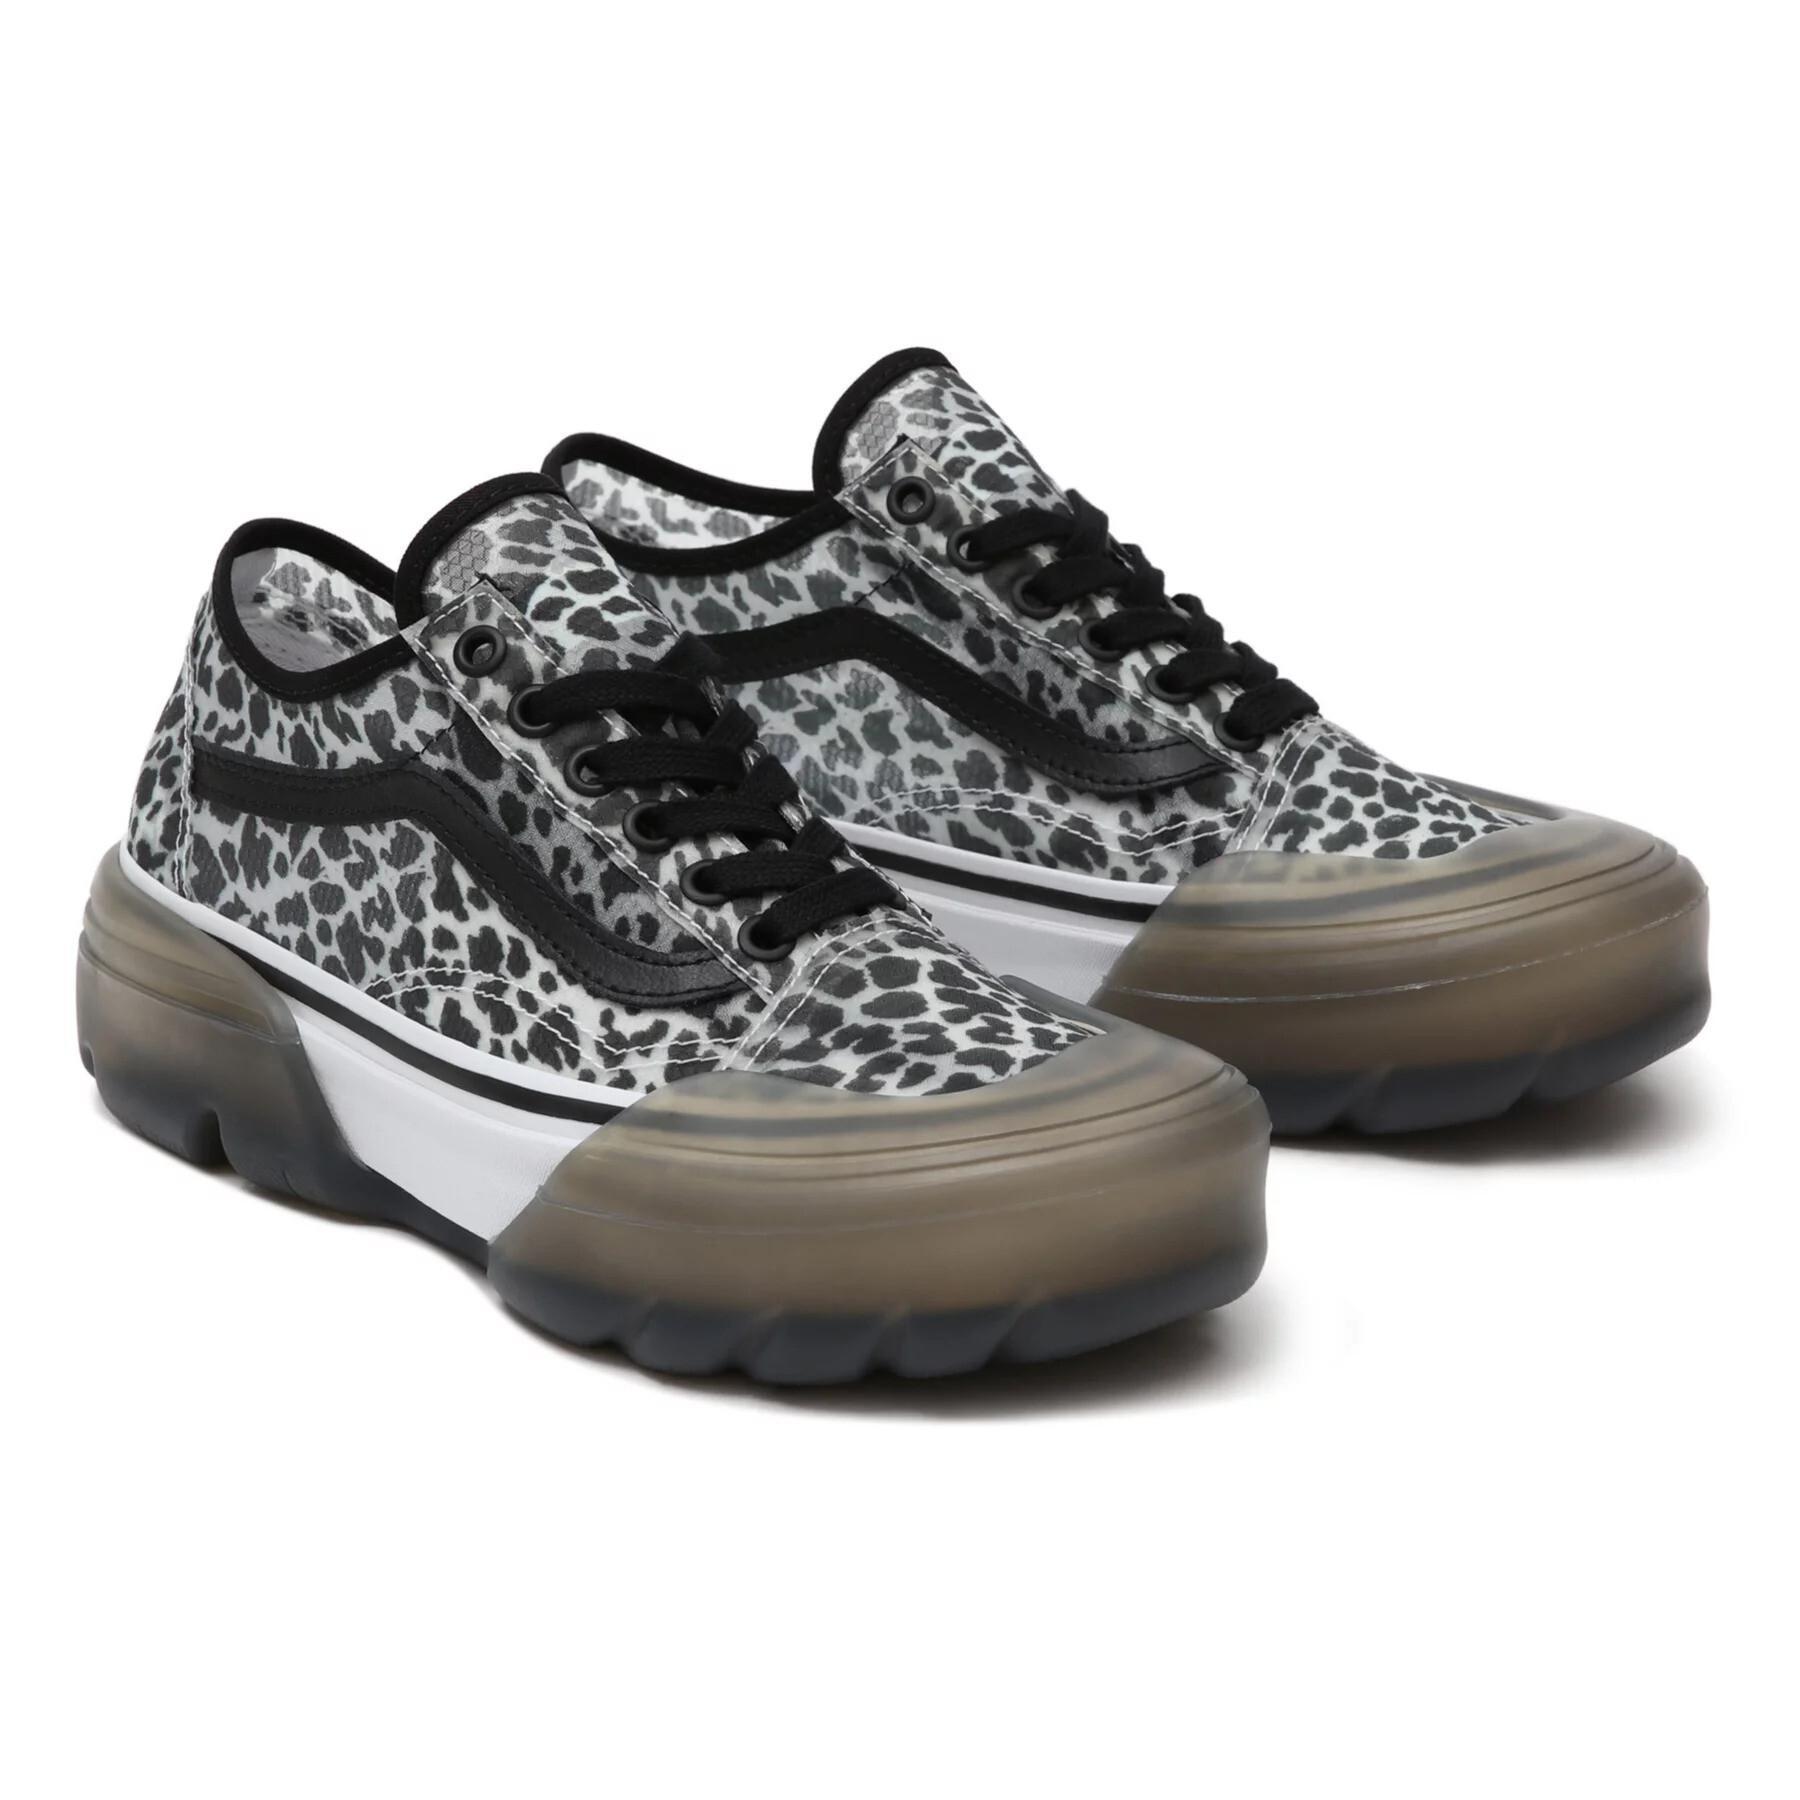 Zapatillas de deporte para mujeres Vans Old Skool Tapered DX Dots